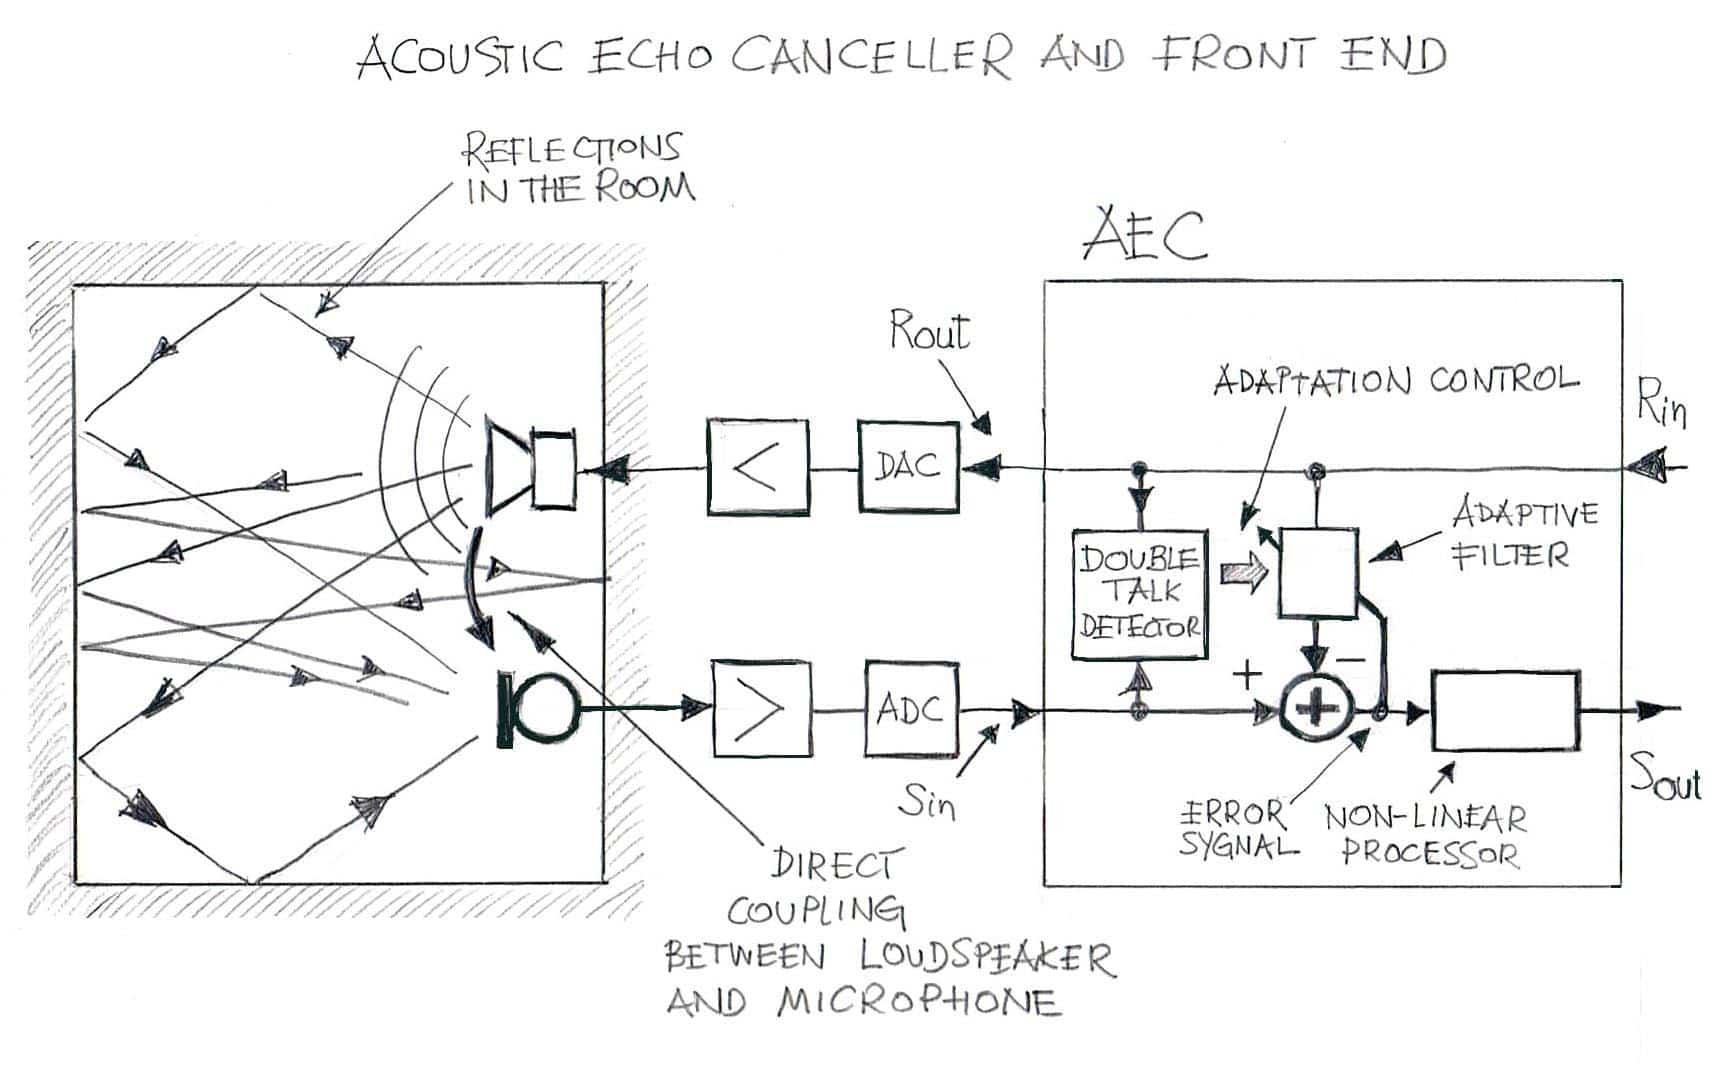 acoustic echo cancellation keeps turning itself on